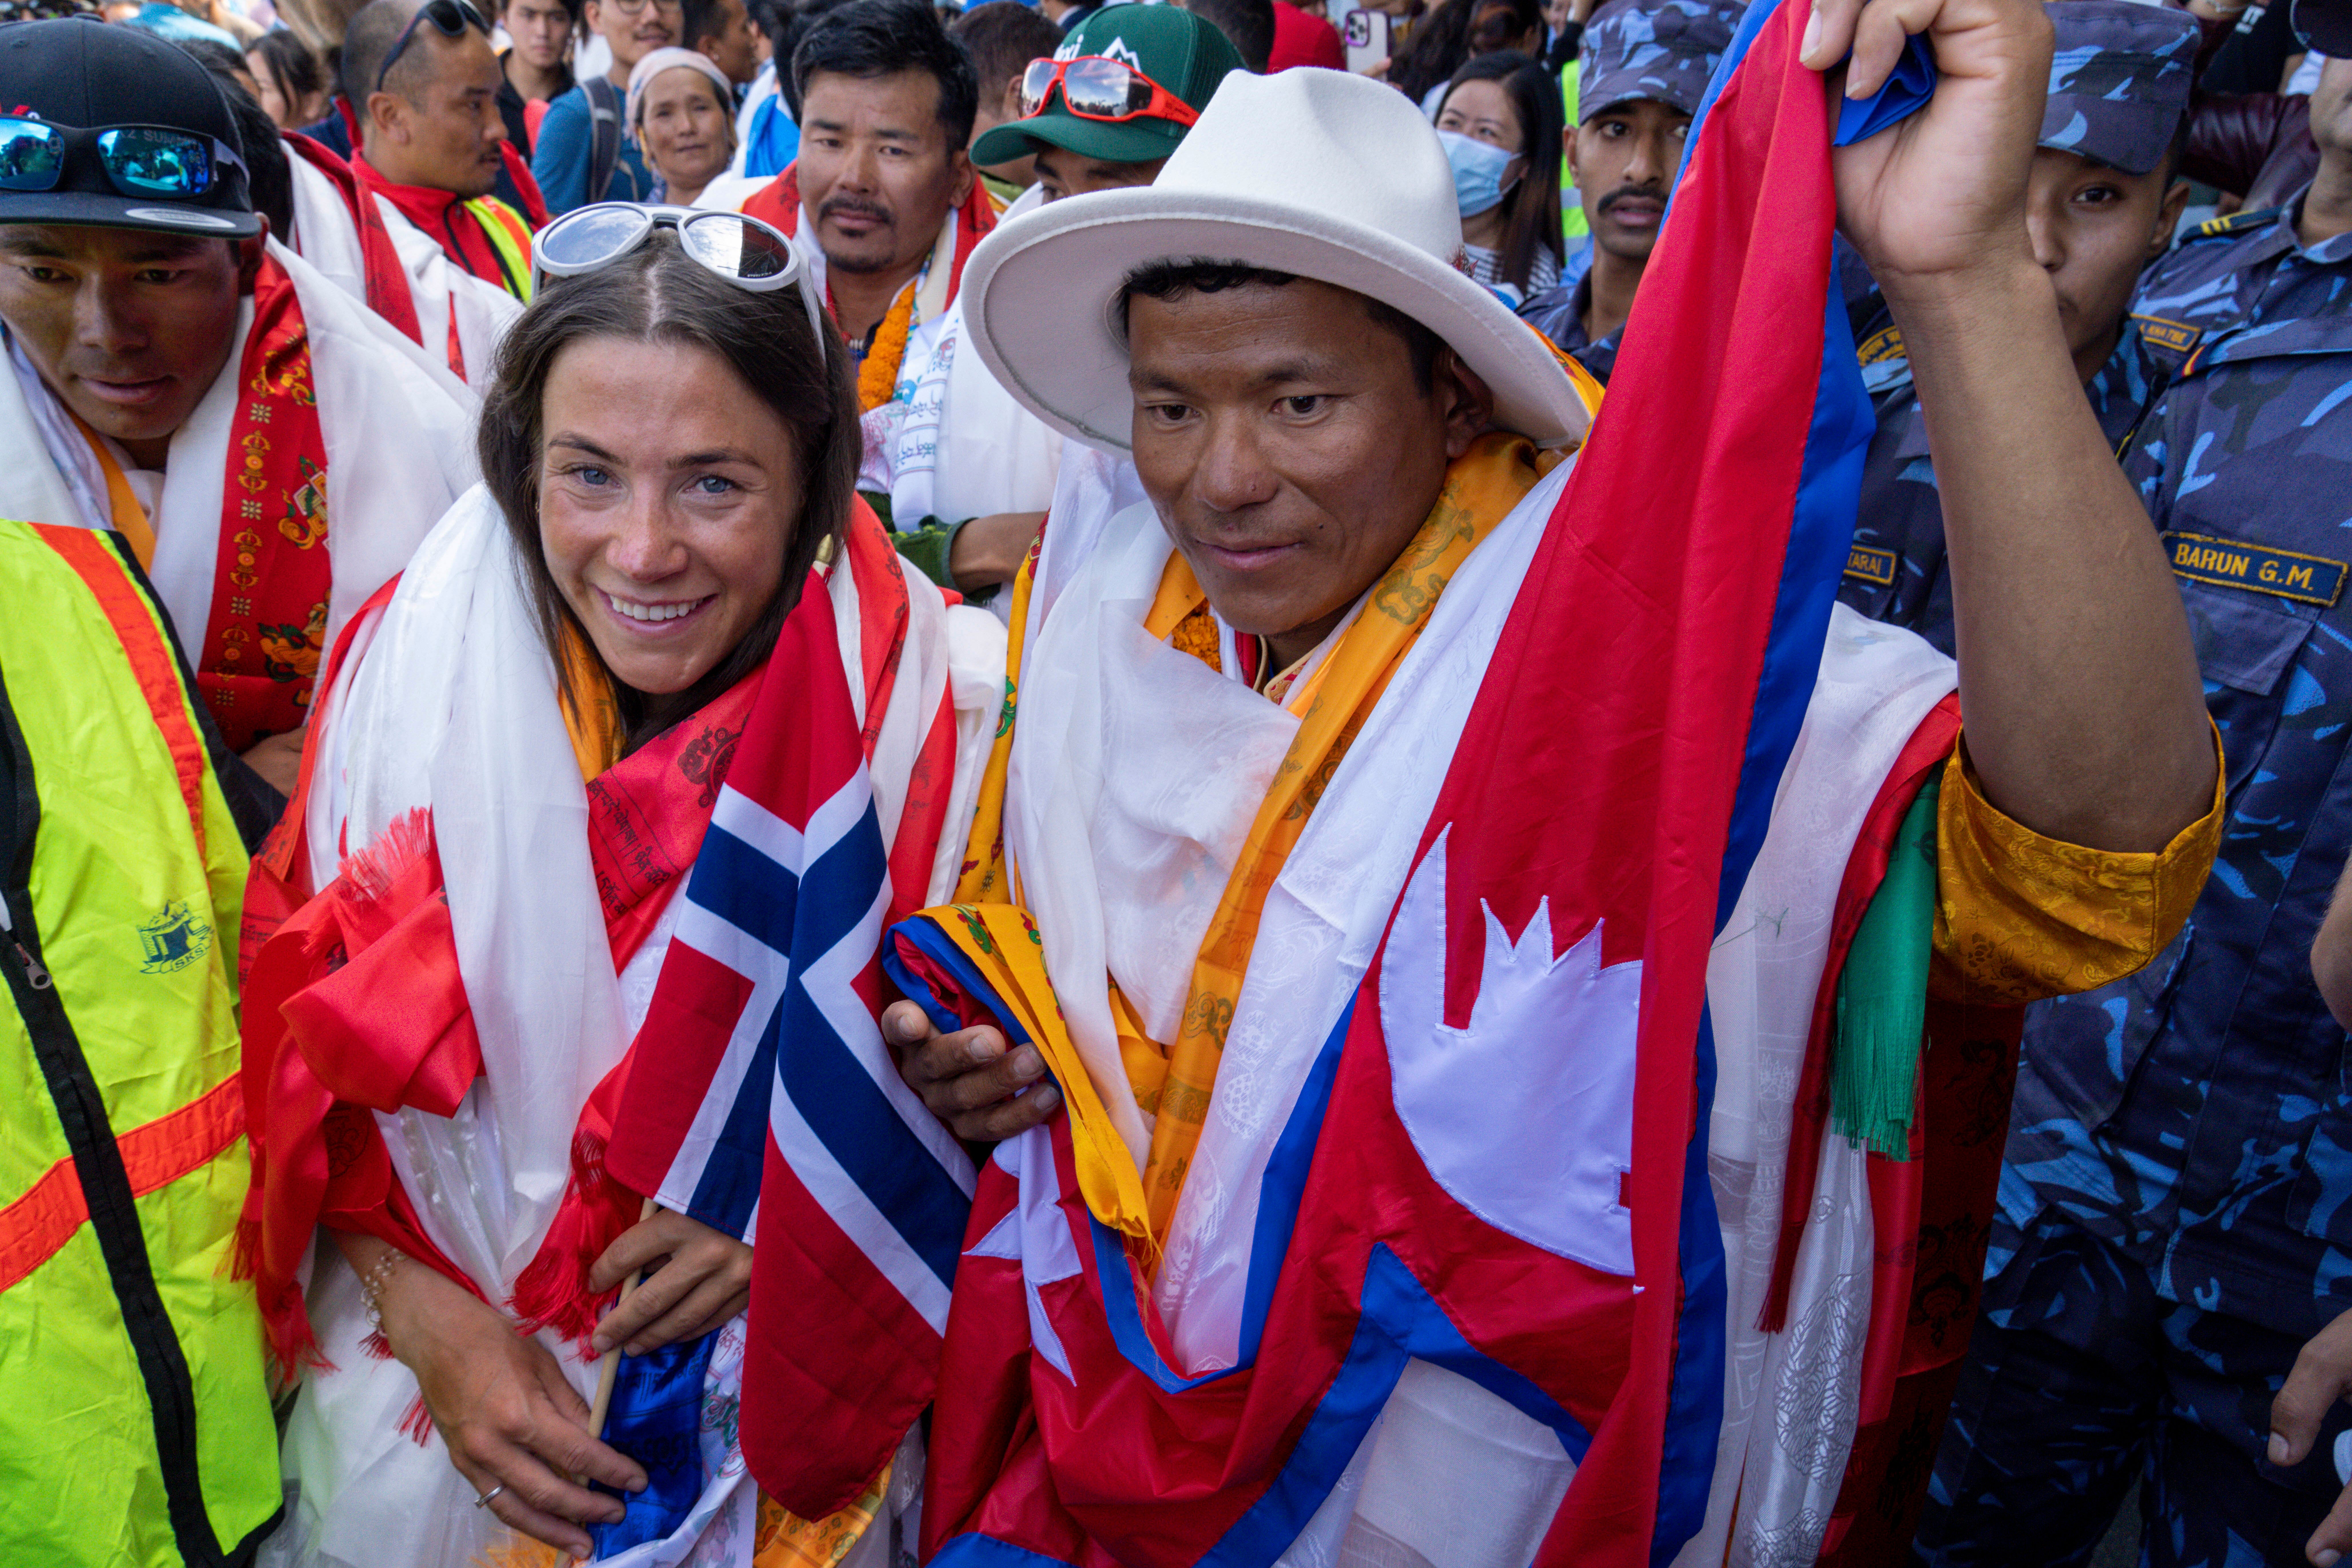 Norwegian climber Kristin Harila, left, and her Nepali guide Tenjen Sherpa